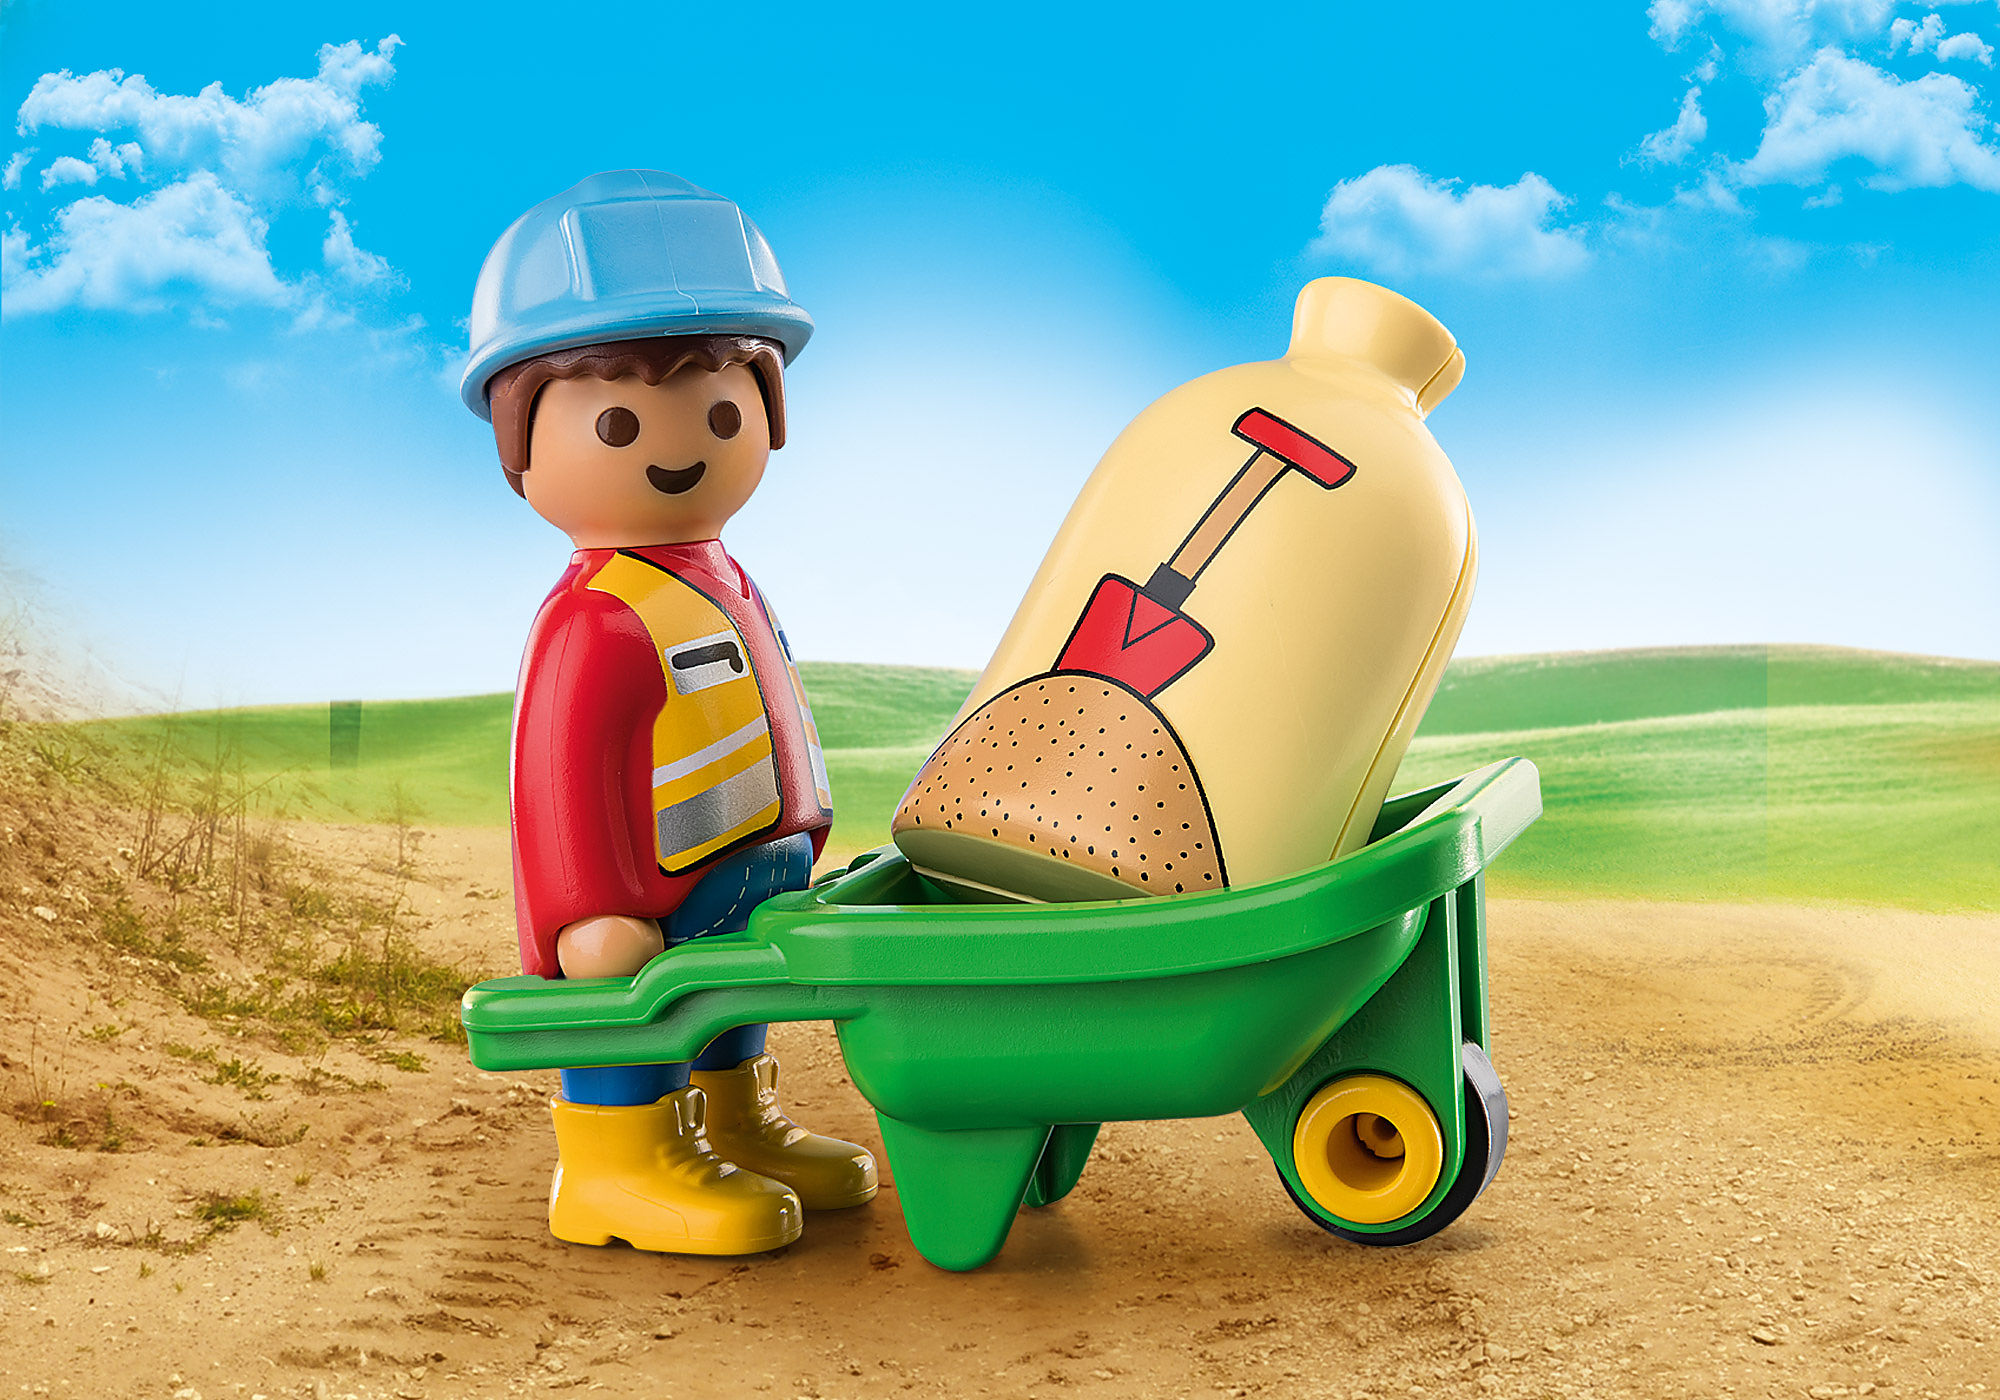 Construction Worker with Wheelbarrow - 70409